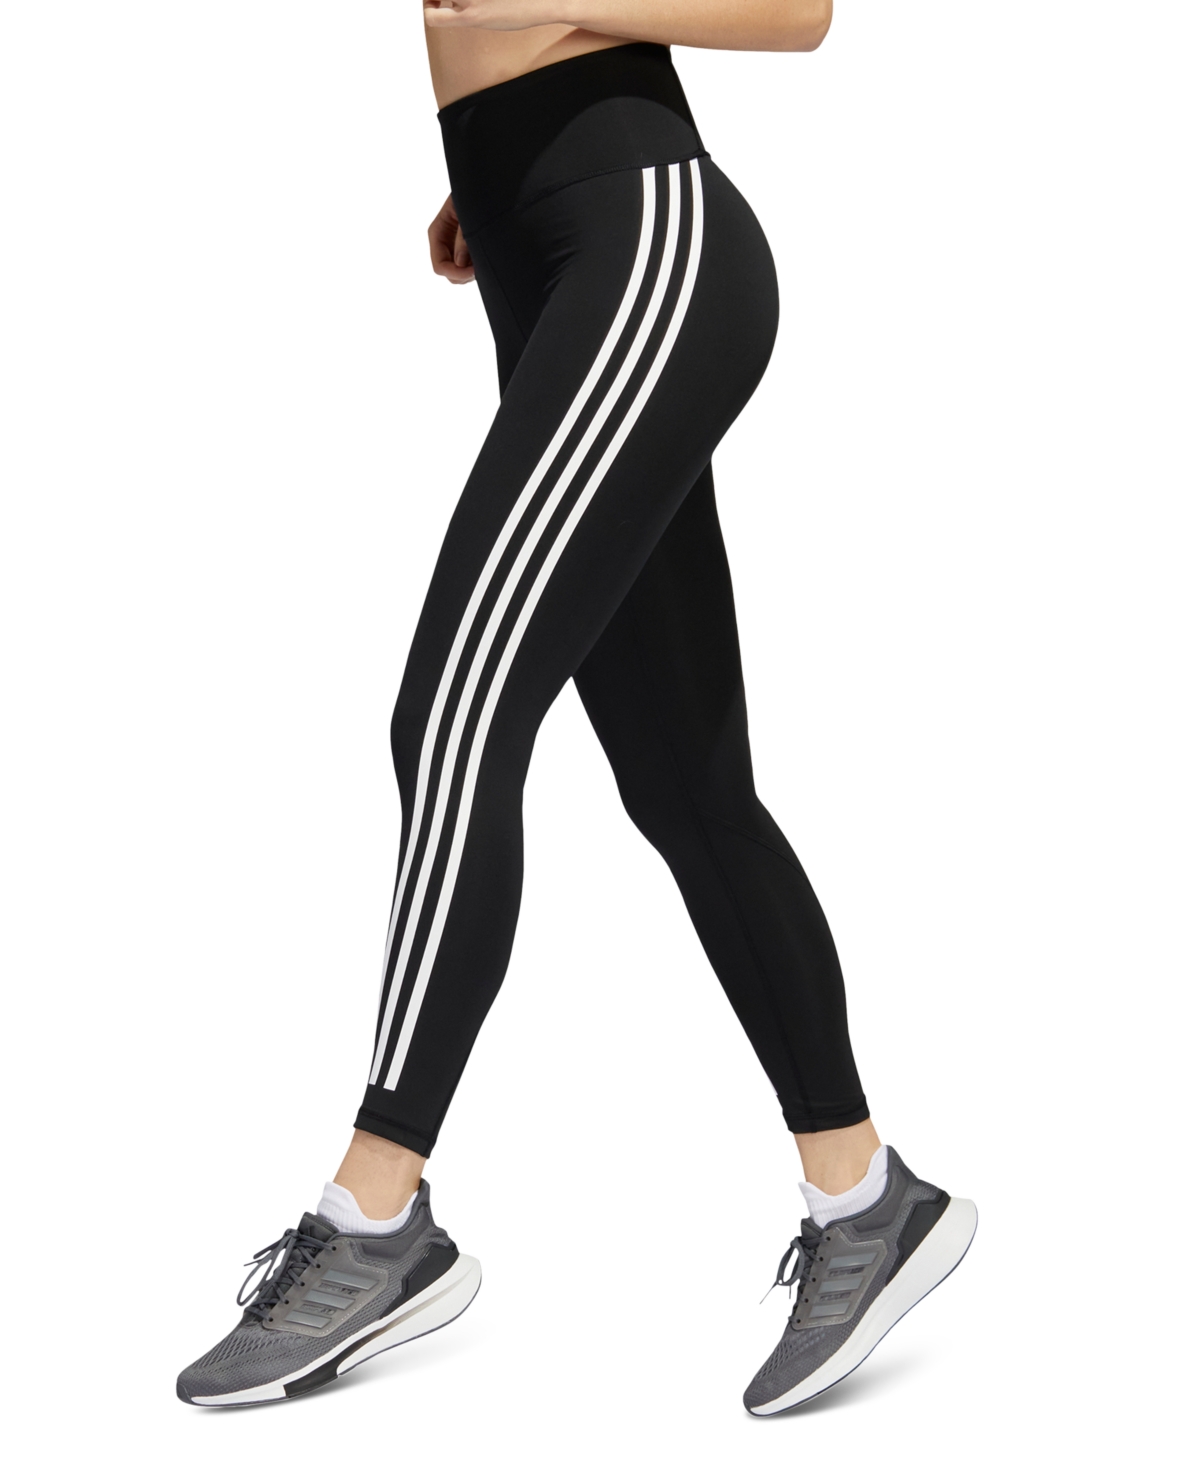  adidas Women's Side-Stripe Tights